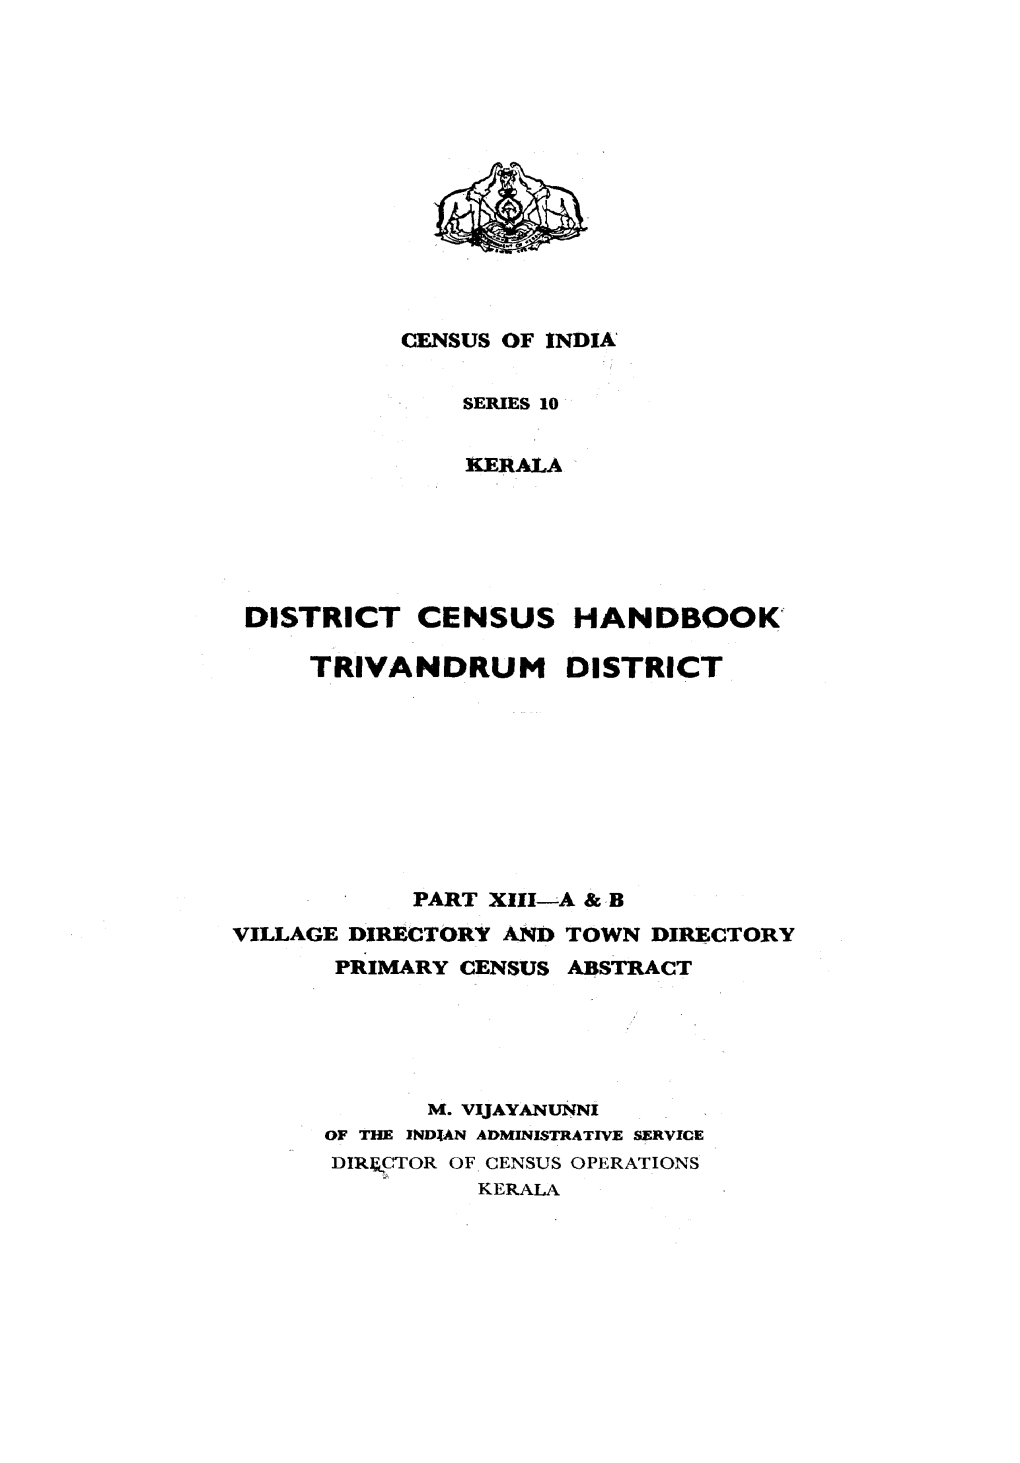 District Census Handbook, Trivandrum, Part XIII-A & B, Series-10